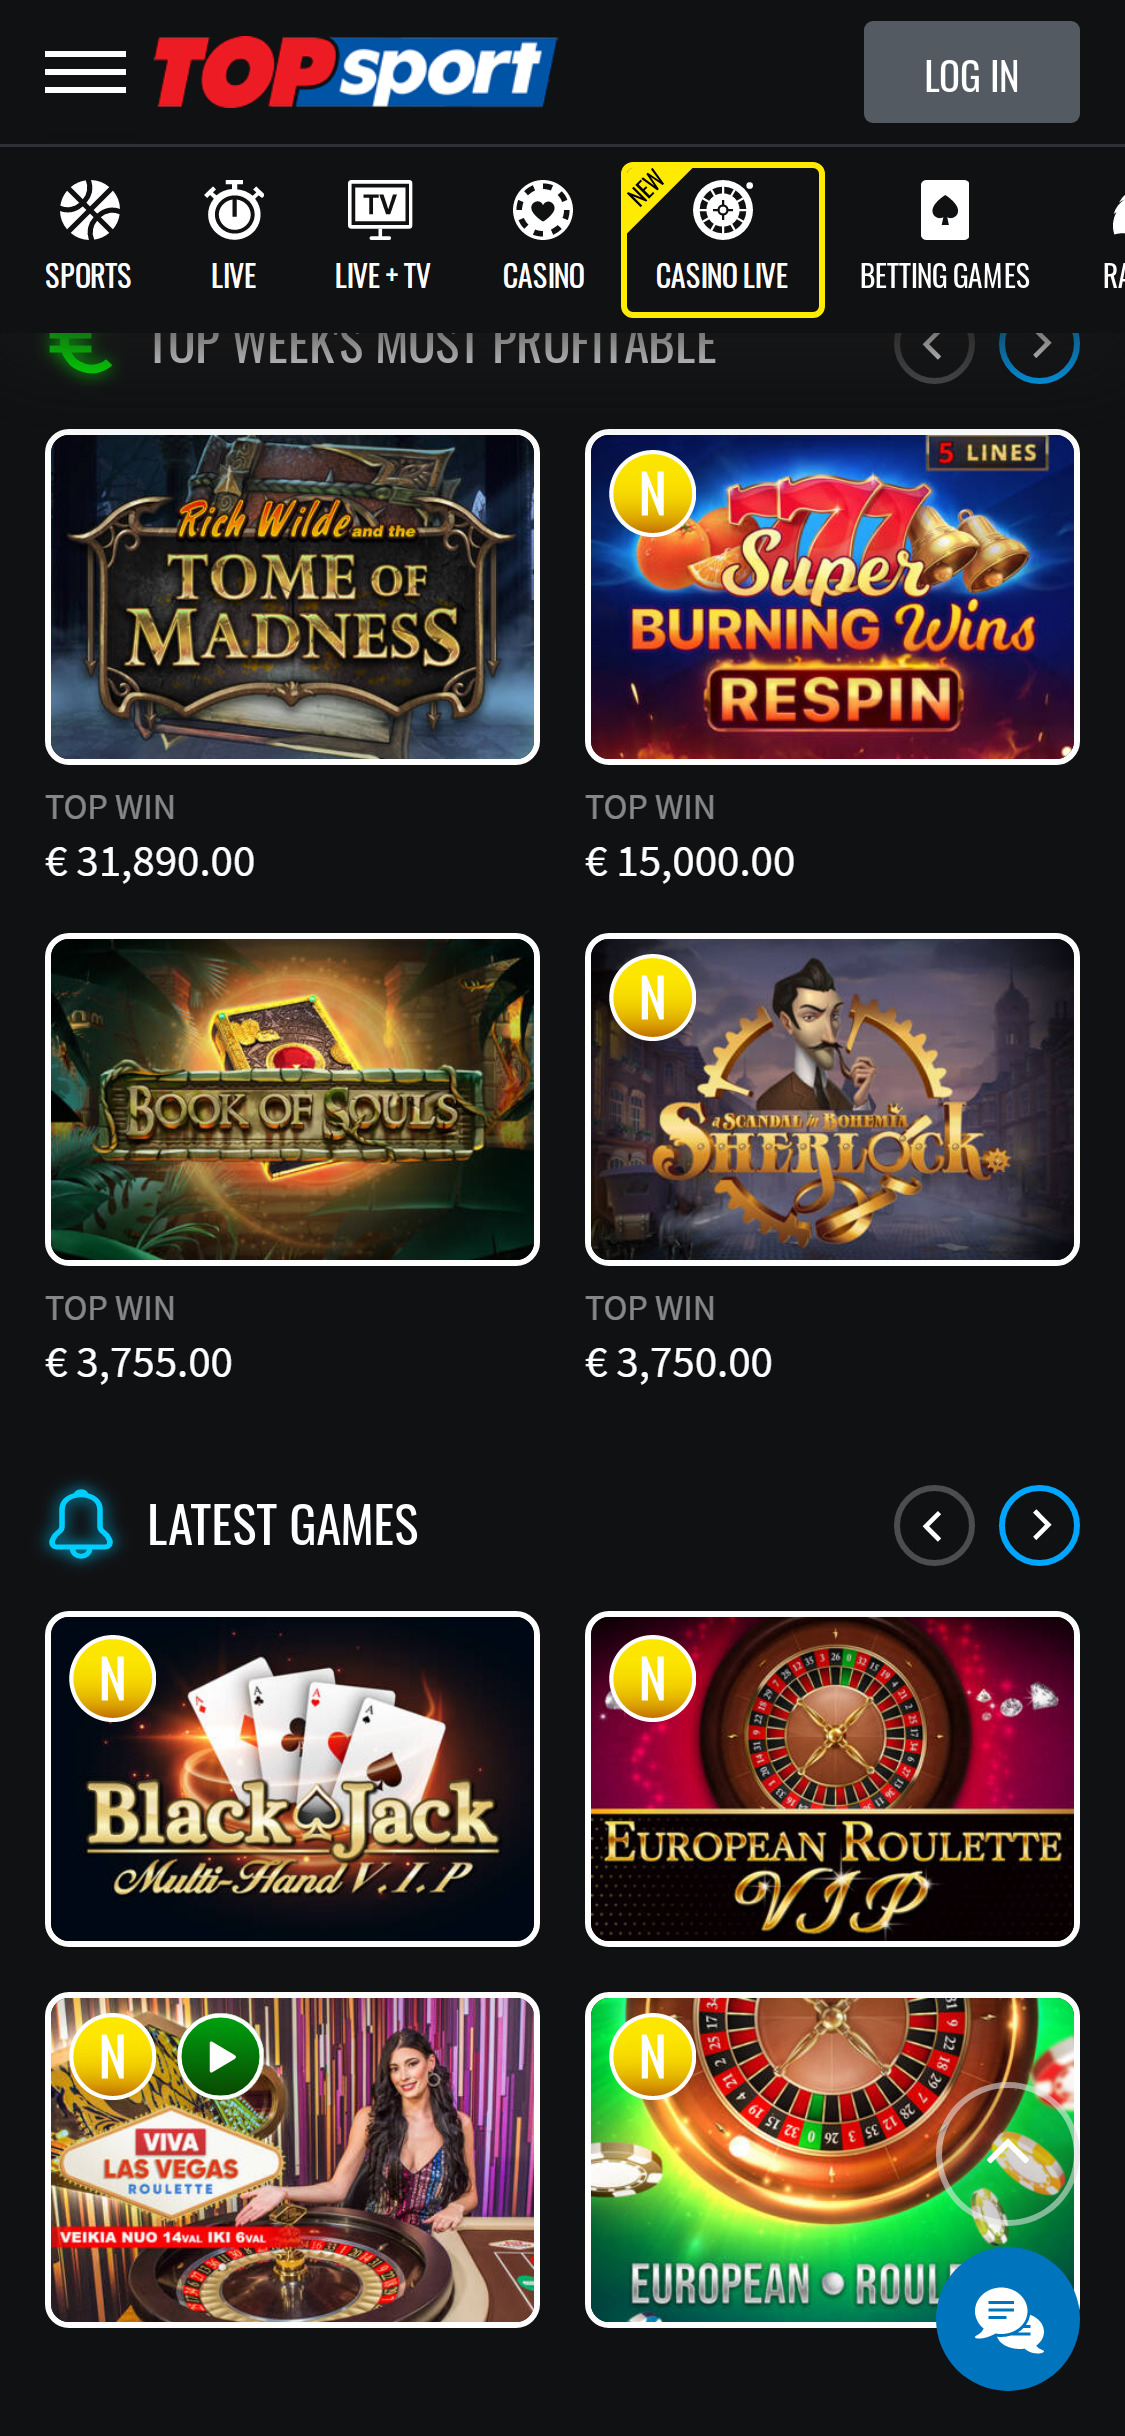 Top Sport Casino Latvia Mobile Games Review